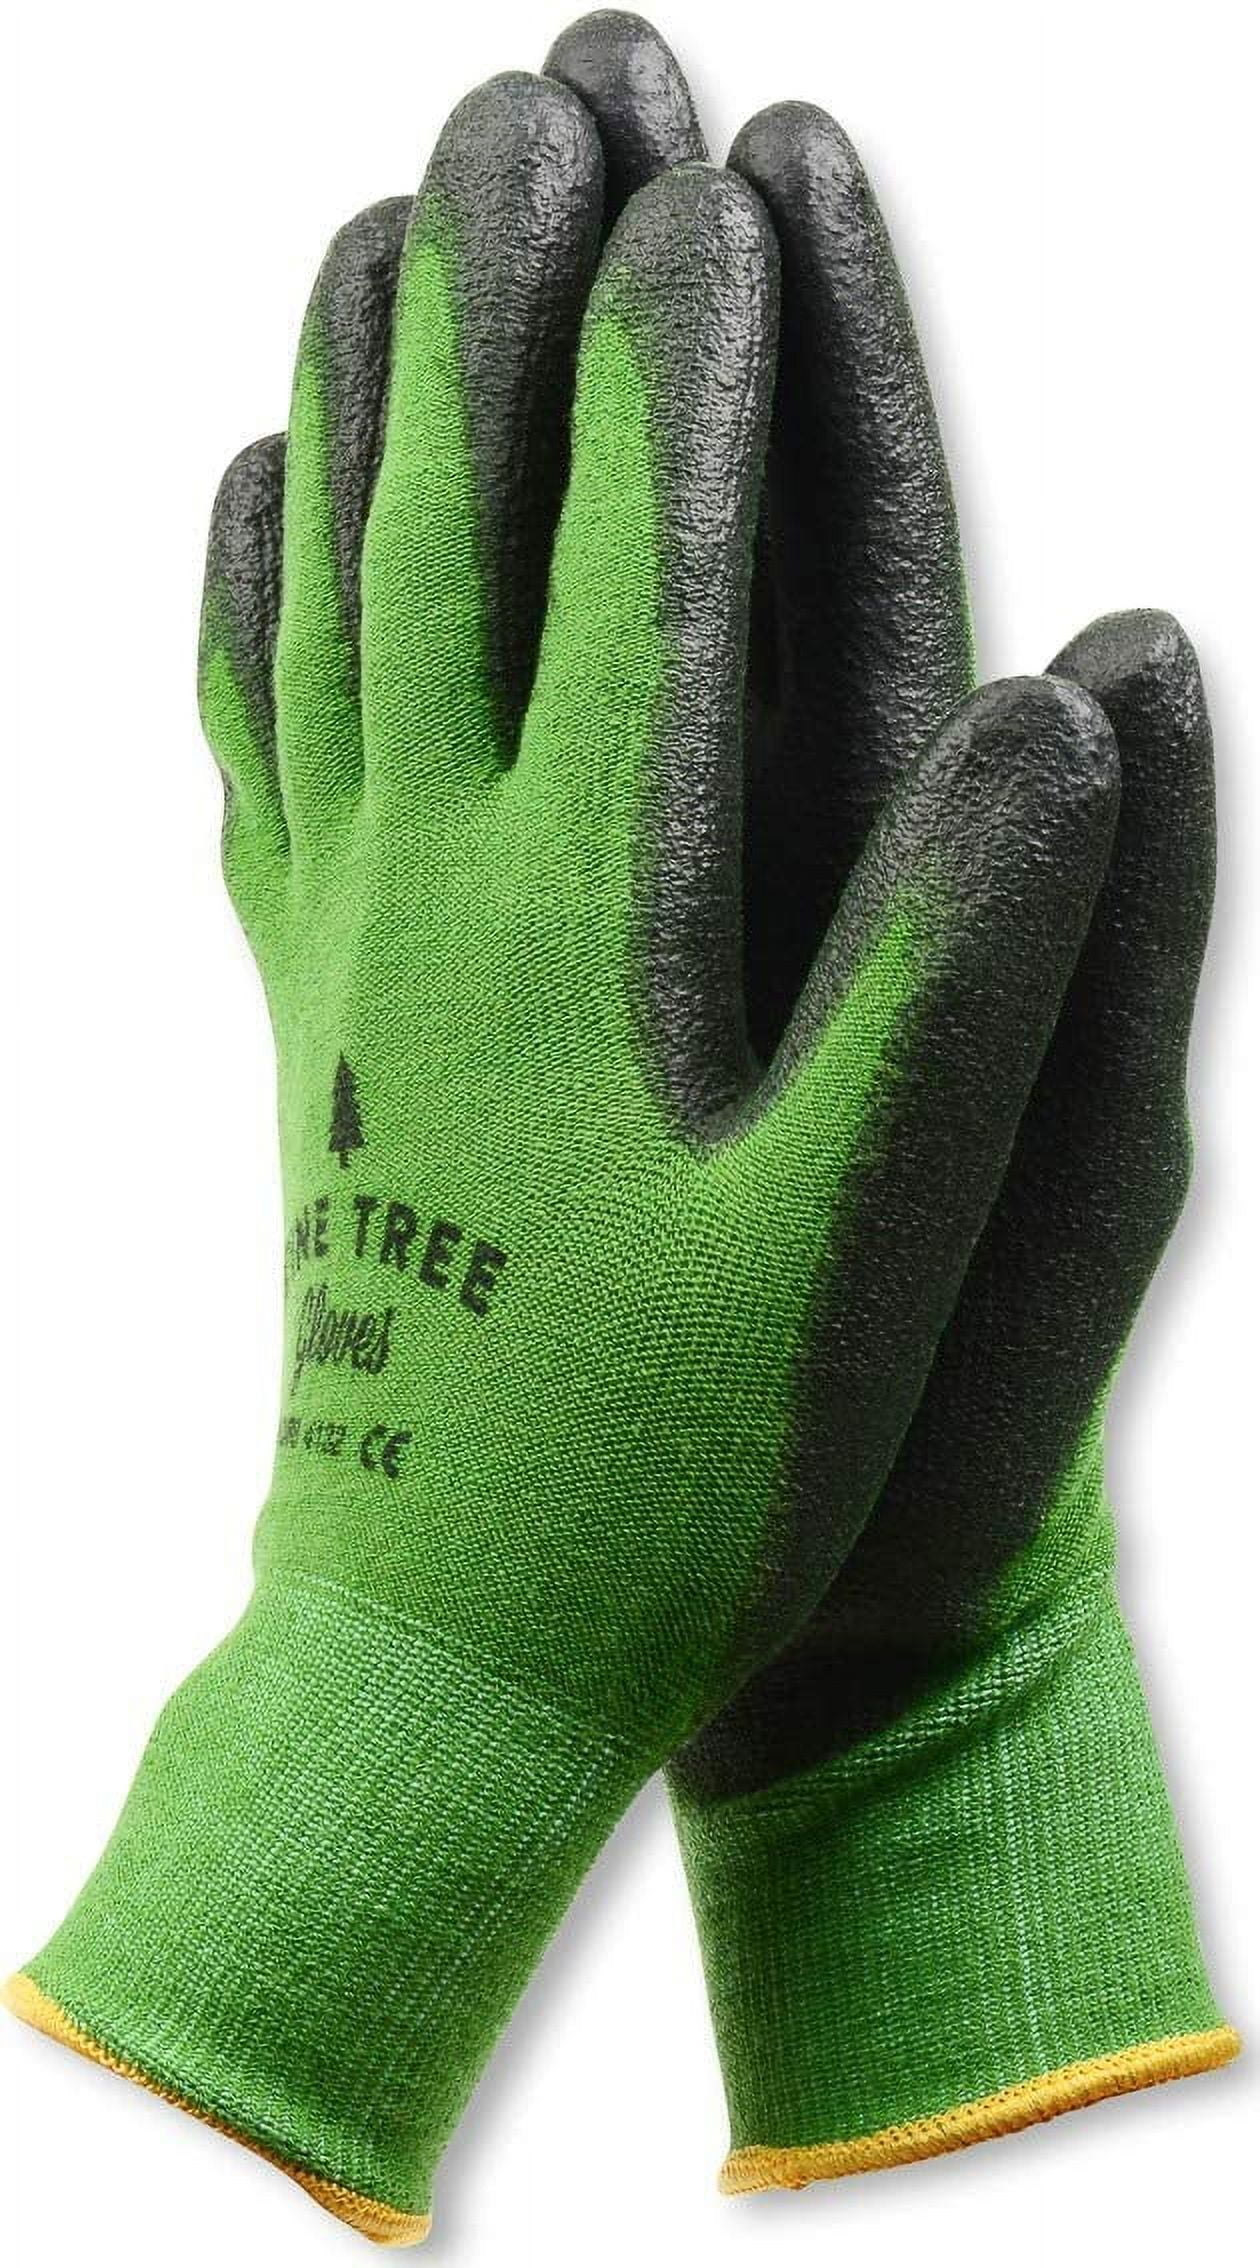  HOMEANING 2Pcs Gardening Gloves for Women and Men